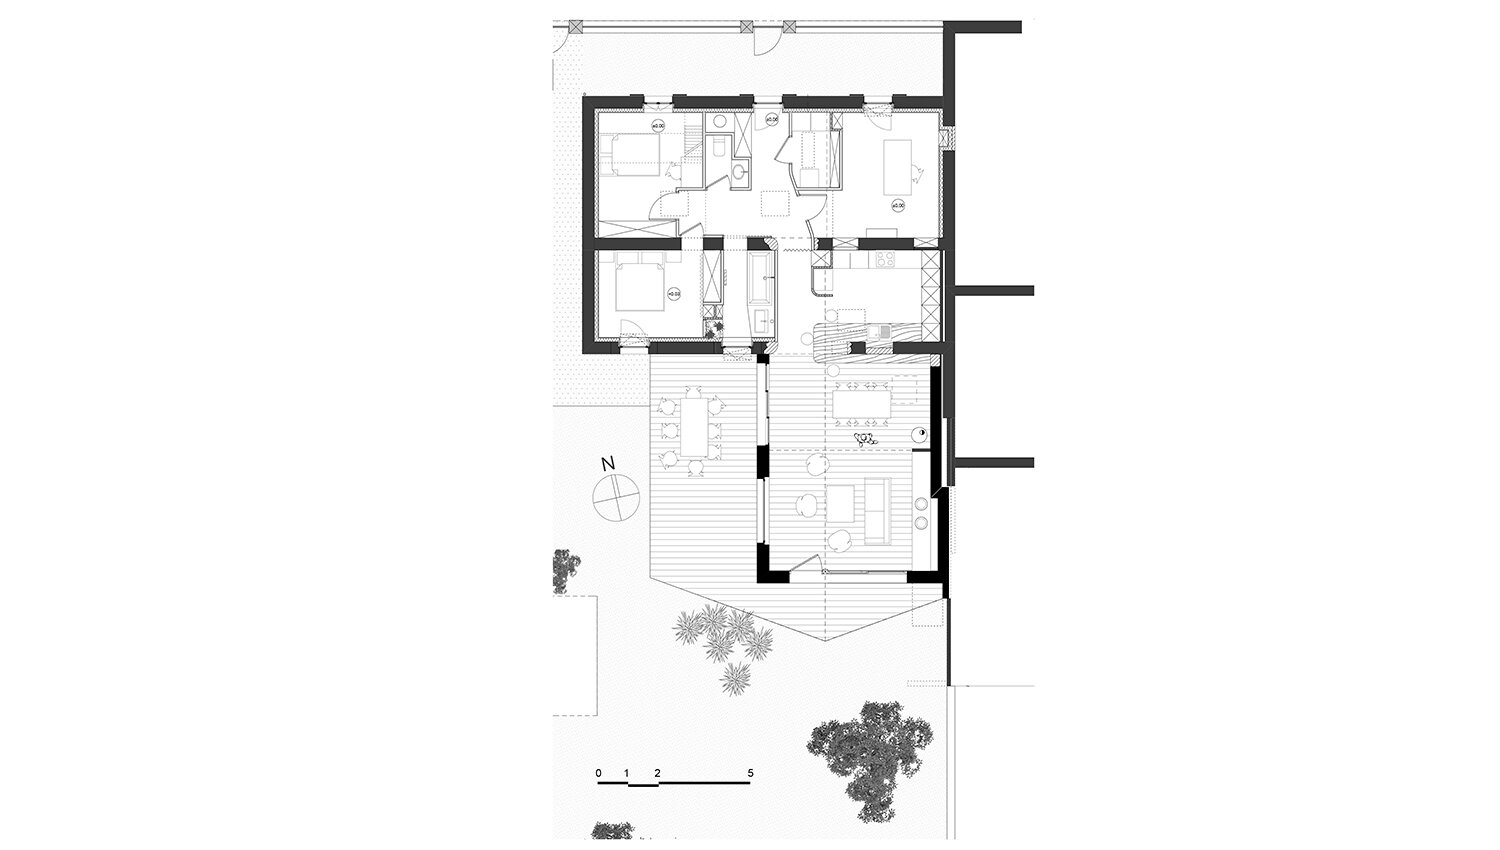 Maison-Paulette-plan-individuel-logement-alterlab_PH.jpg